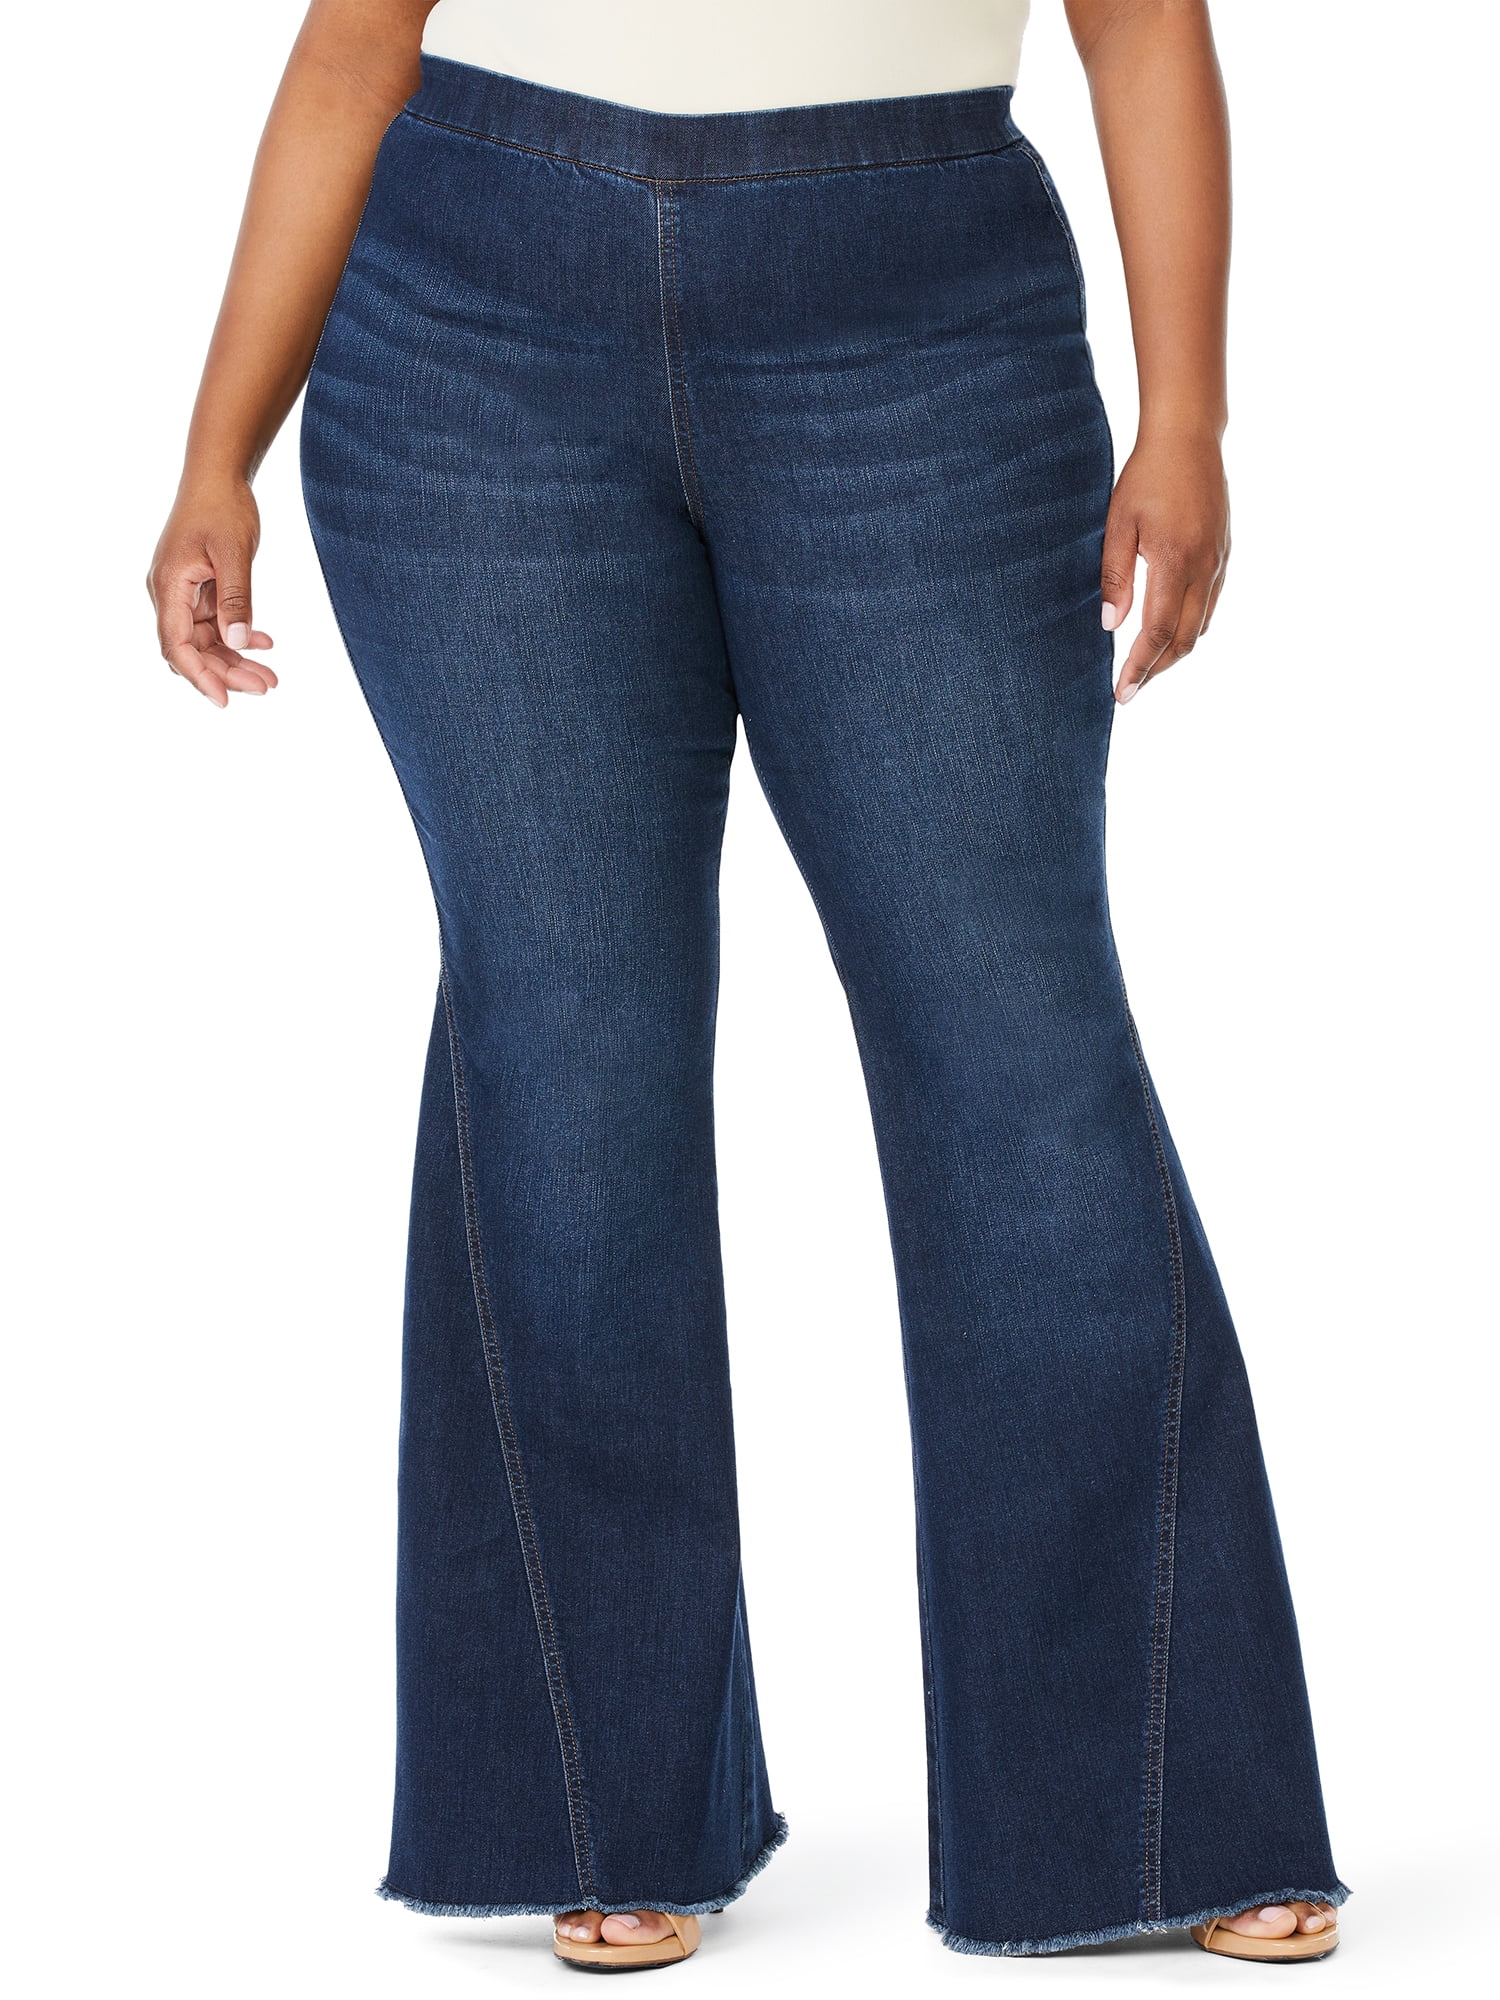 Sofia Jeans by Sofia Vergara Melisa High Rise Flare Coated Size 16